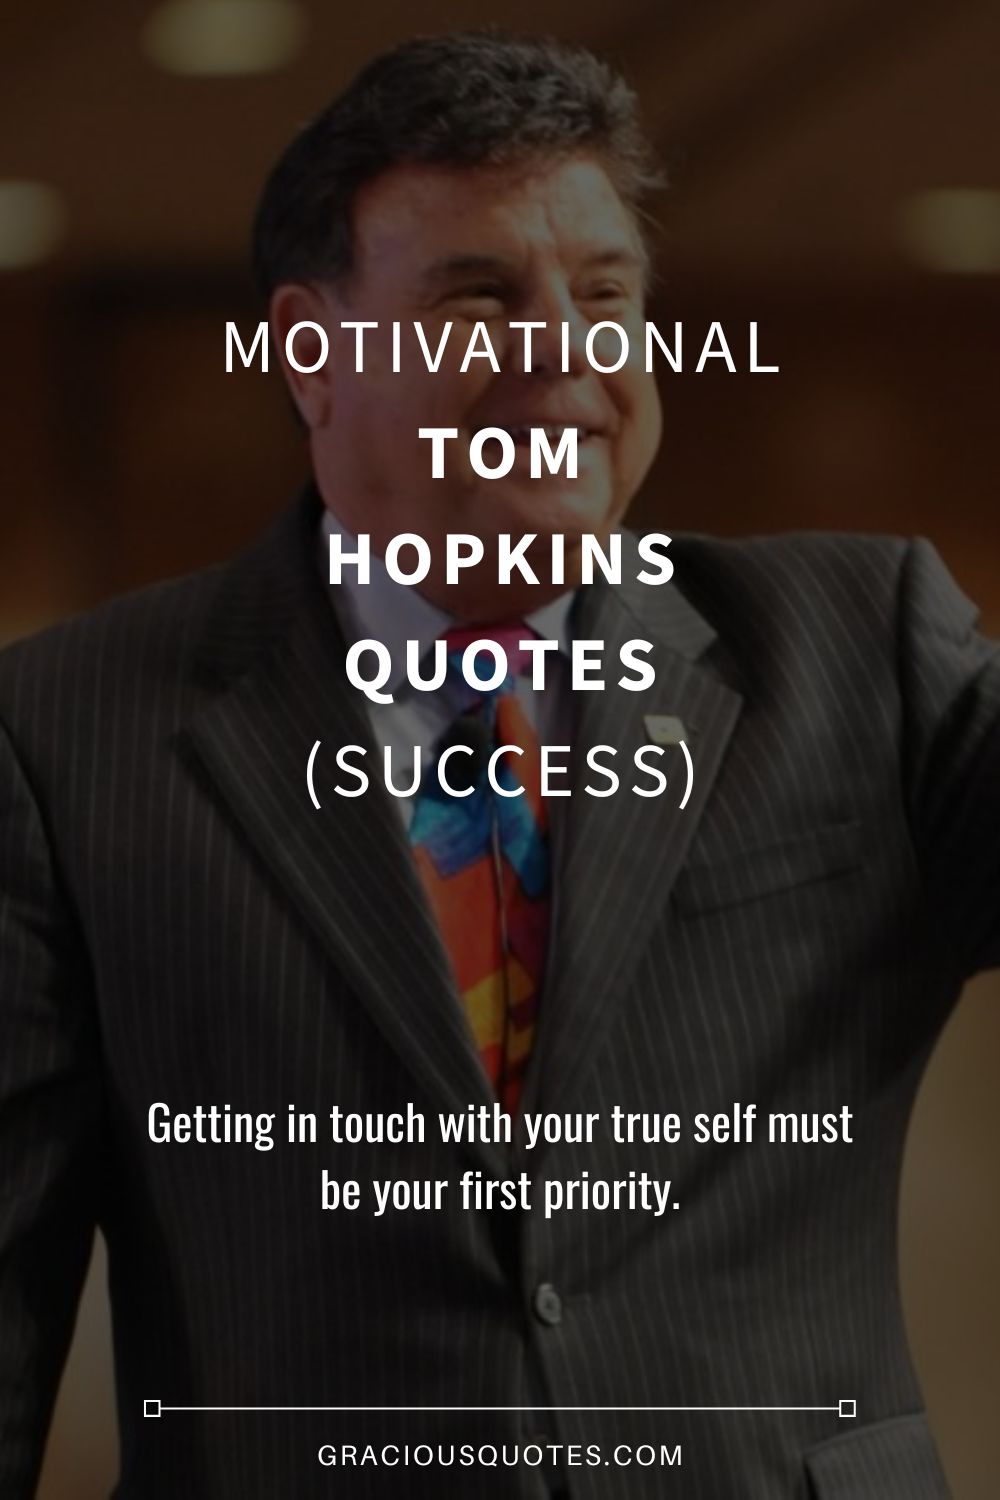 Motivational Tom Hopkins Quotes (SUCCESS) - Gracious Quotes